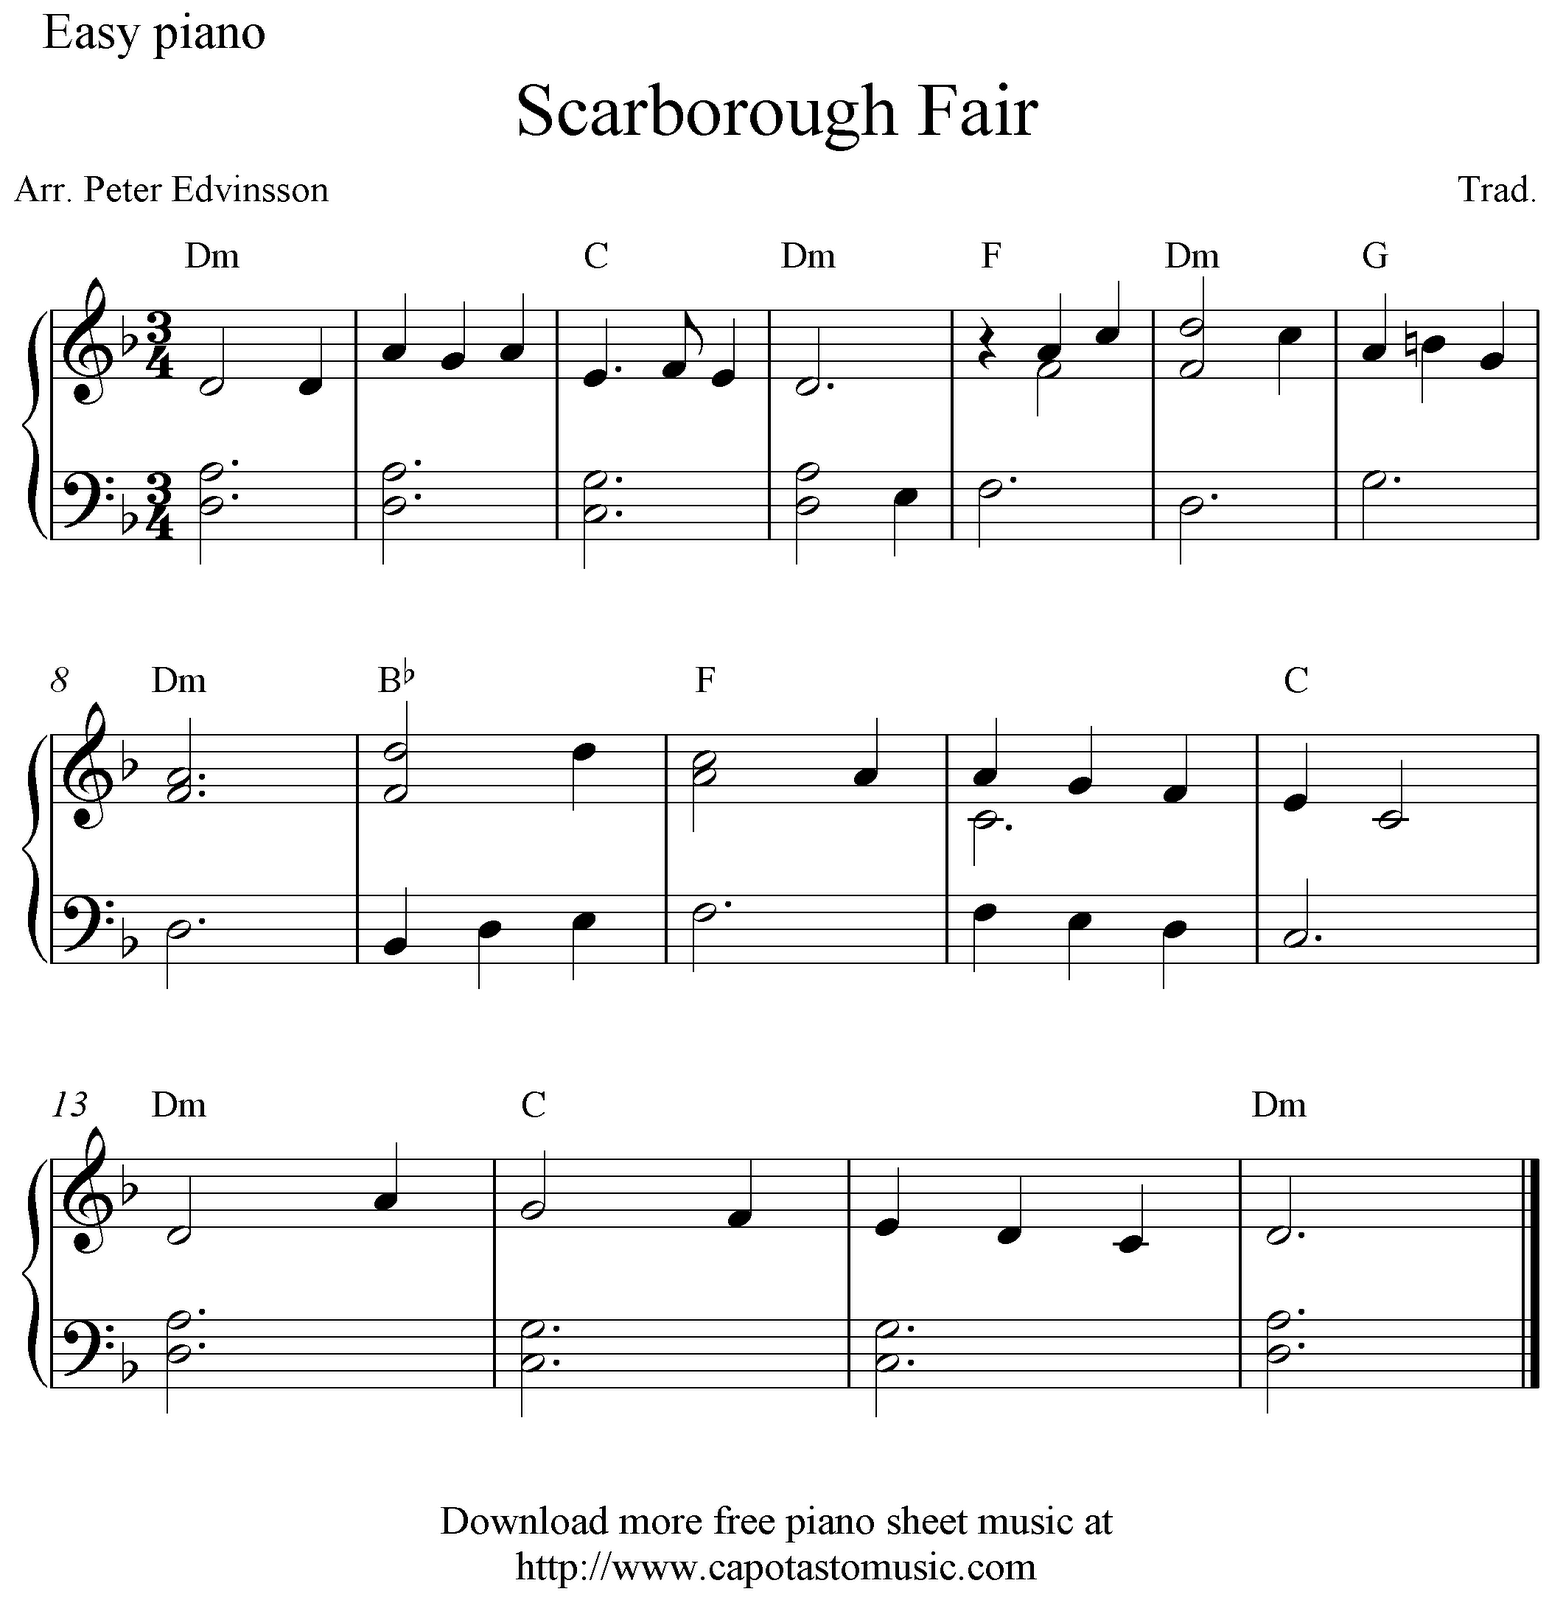 Free easy piano sheet music score, Scarborough Fair